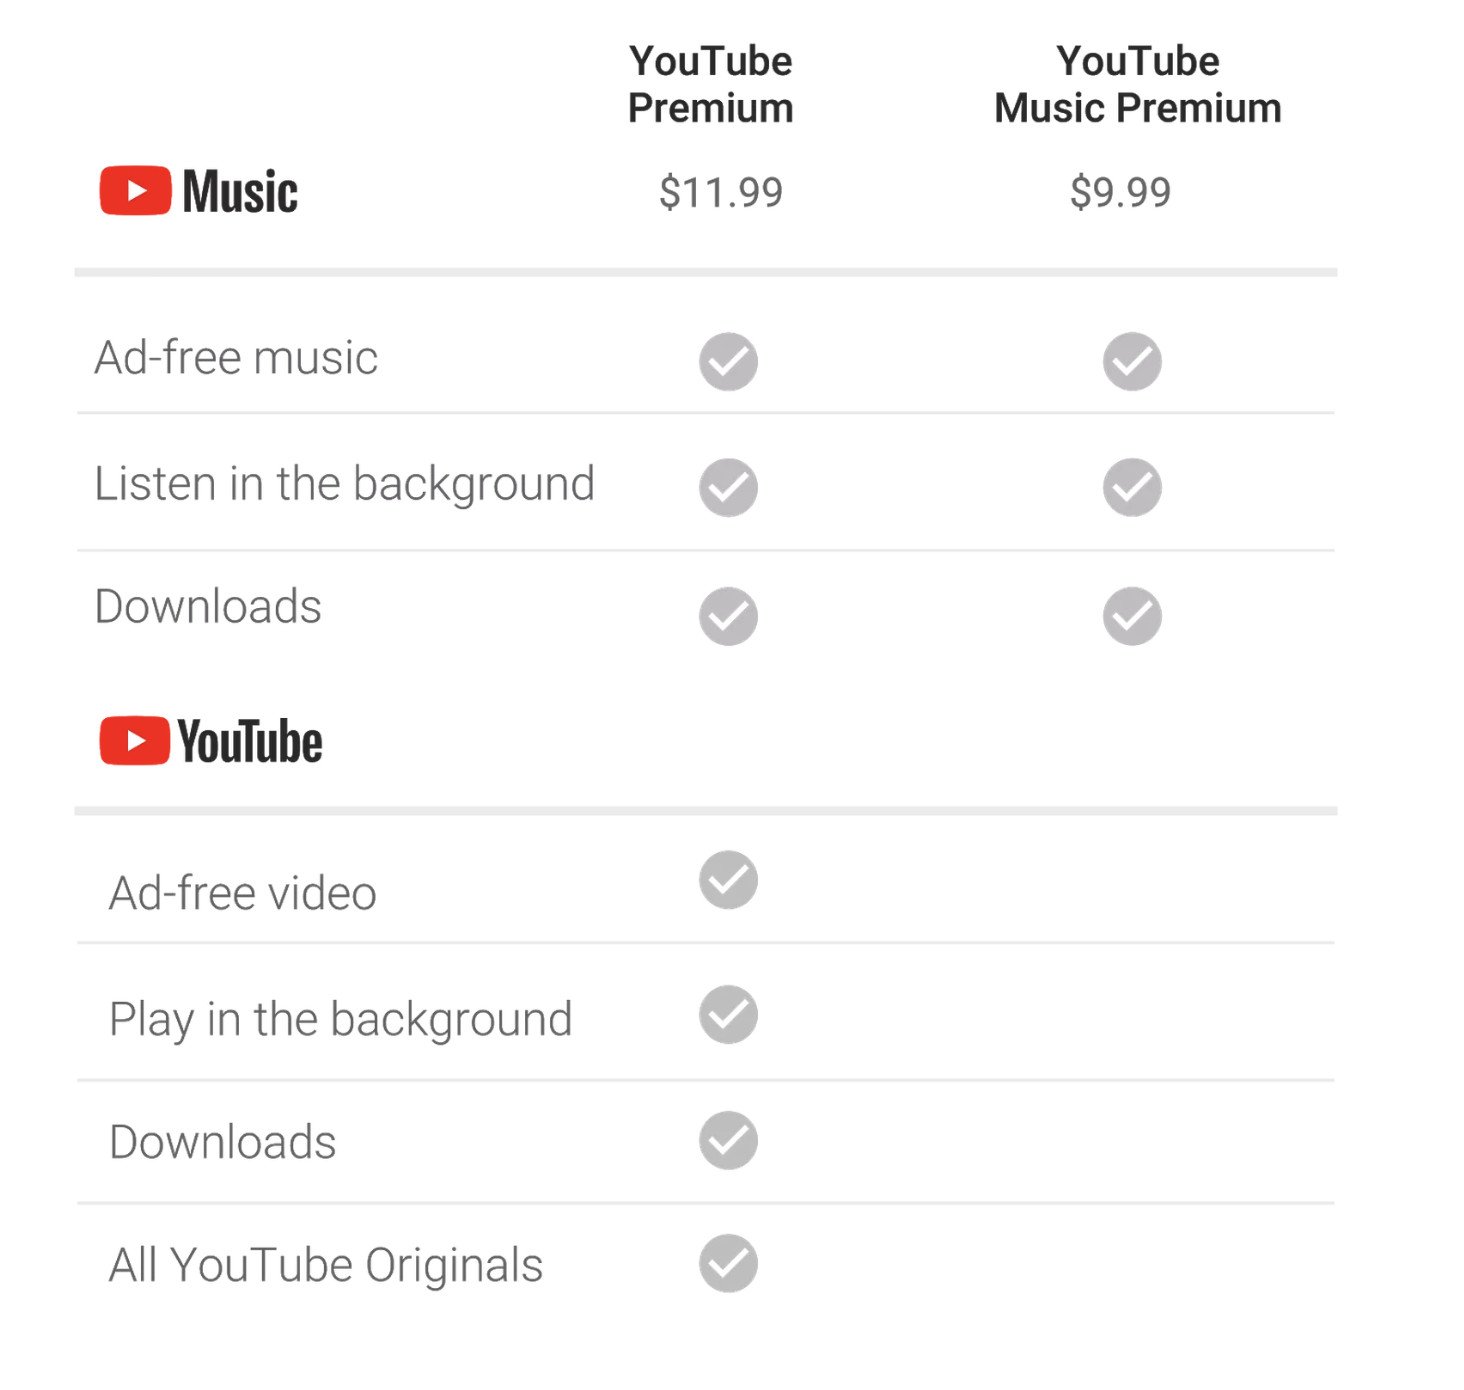 YouTube Music Premium and YouTube Premium pricing